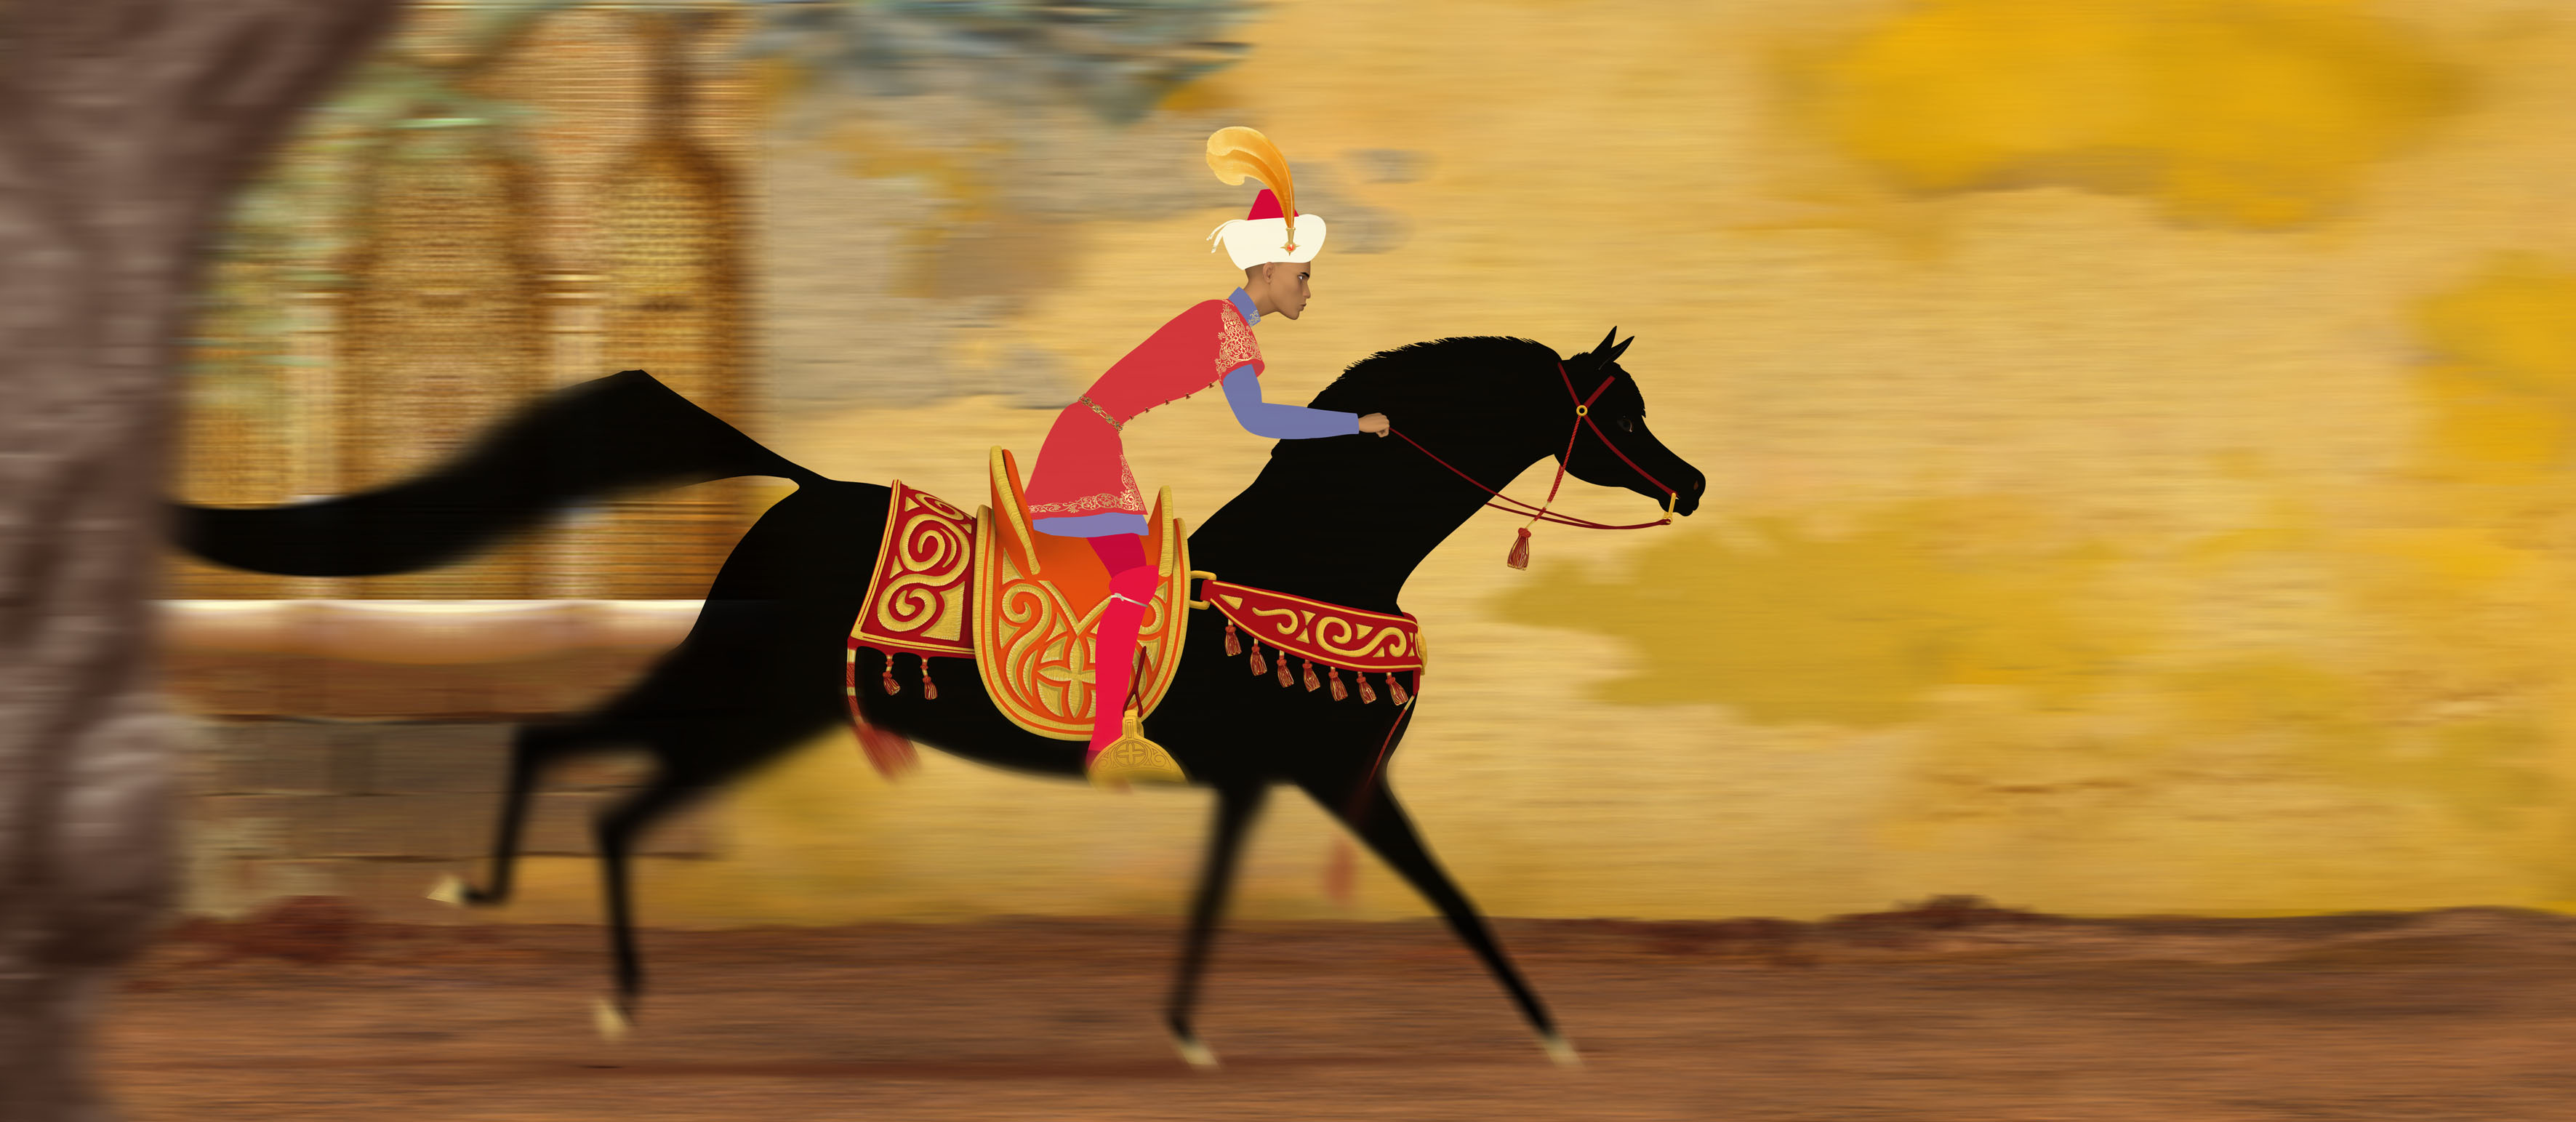 Azur & Asmar: The Princes' Quest (2006) Screenshot 1 